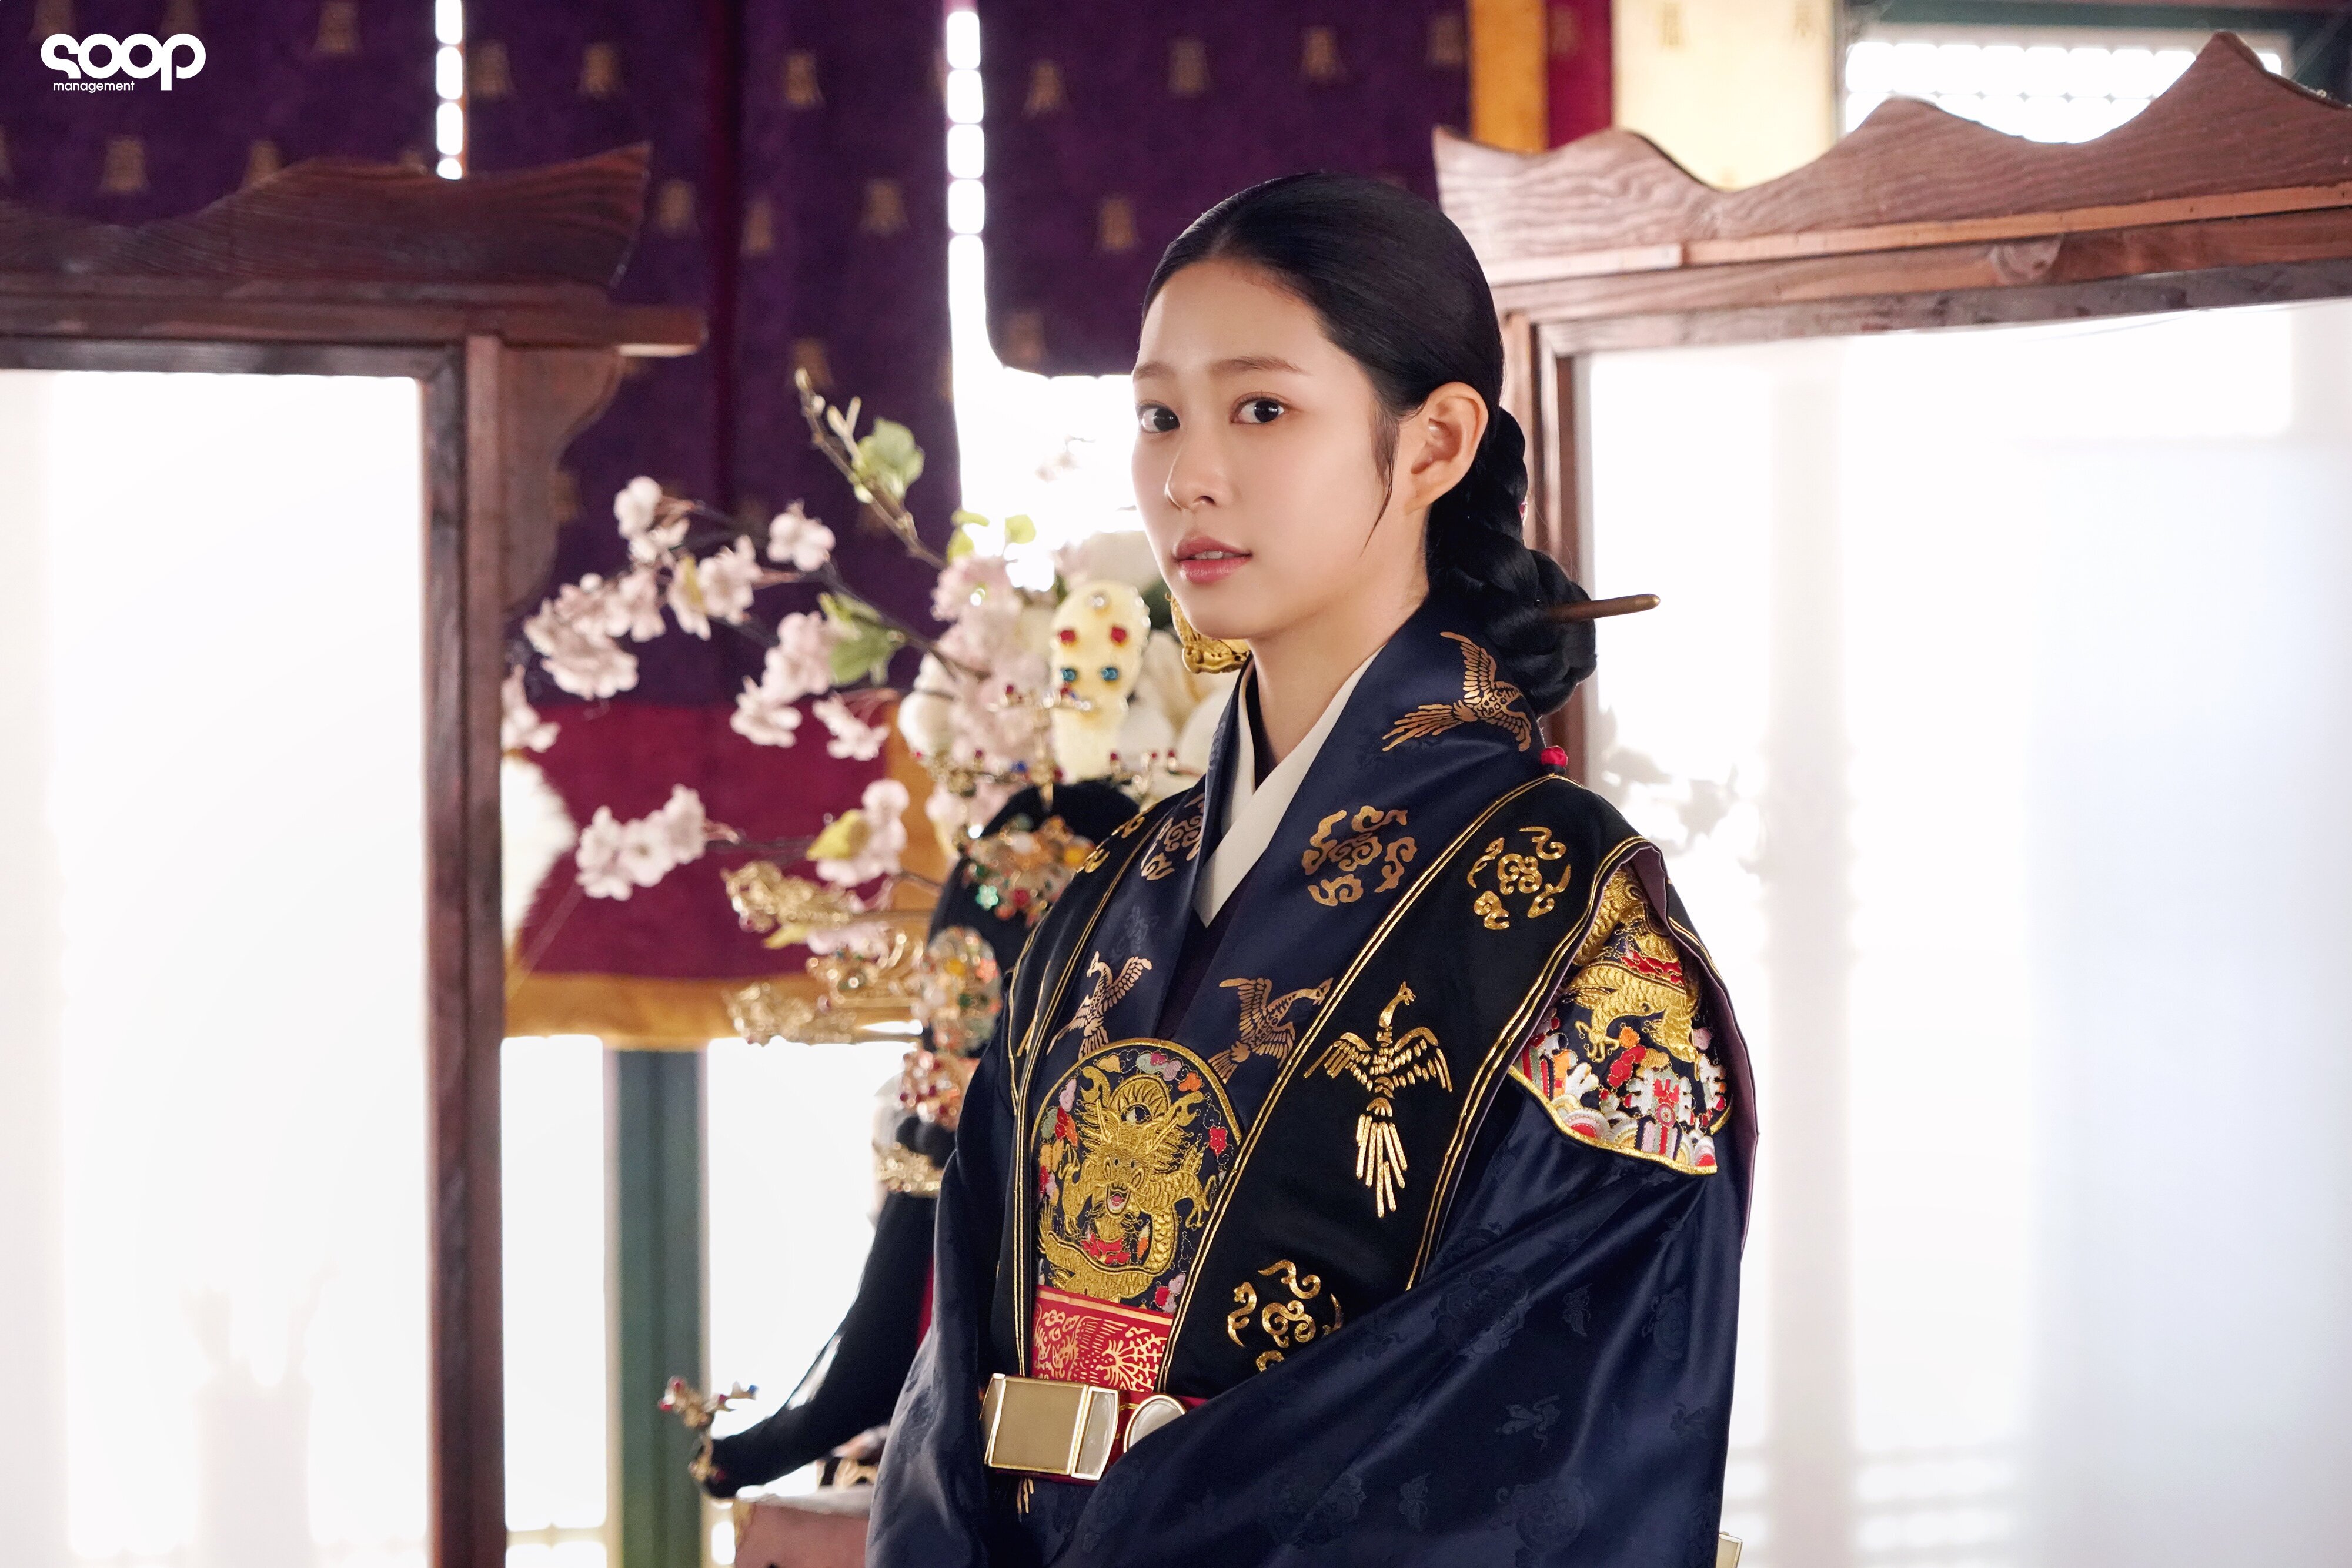 221226 SOOP Naver Post - Kim Minju - 'The Forbidden Marriage' Behind ...